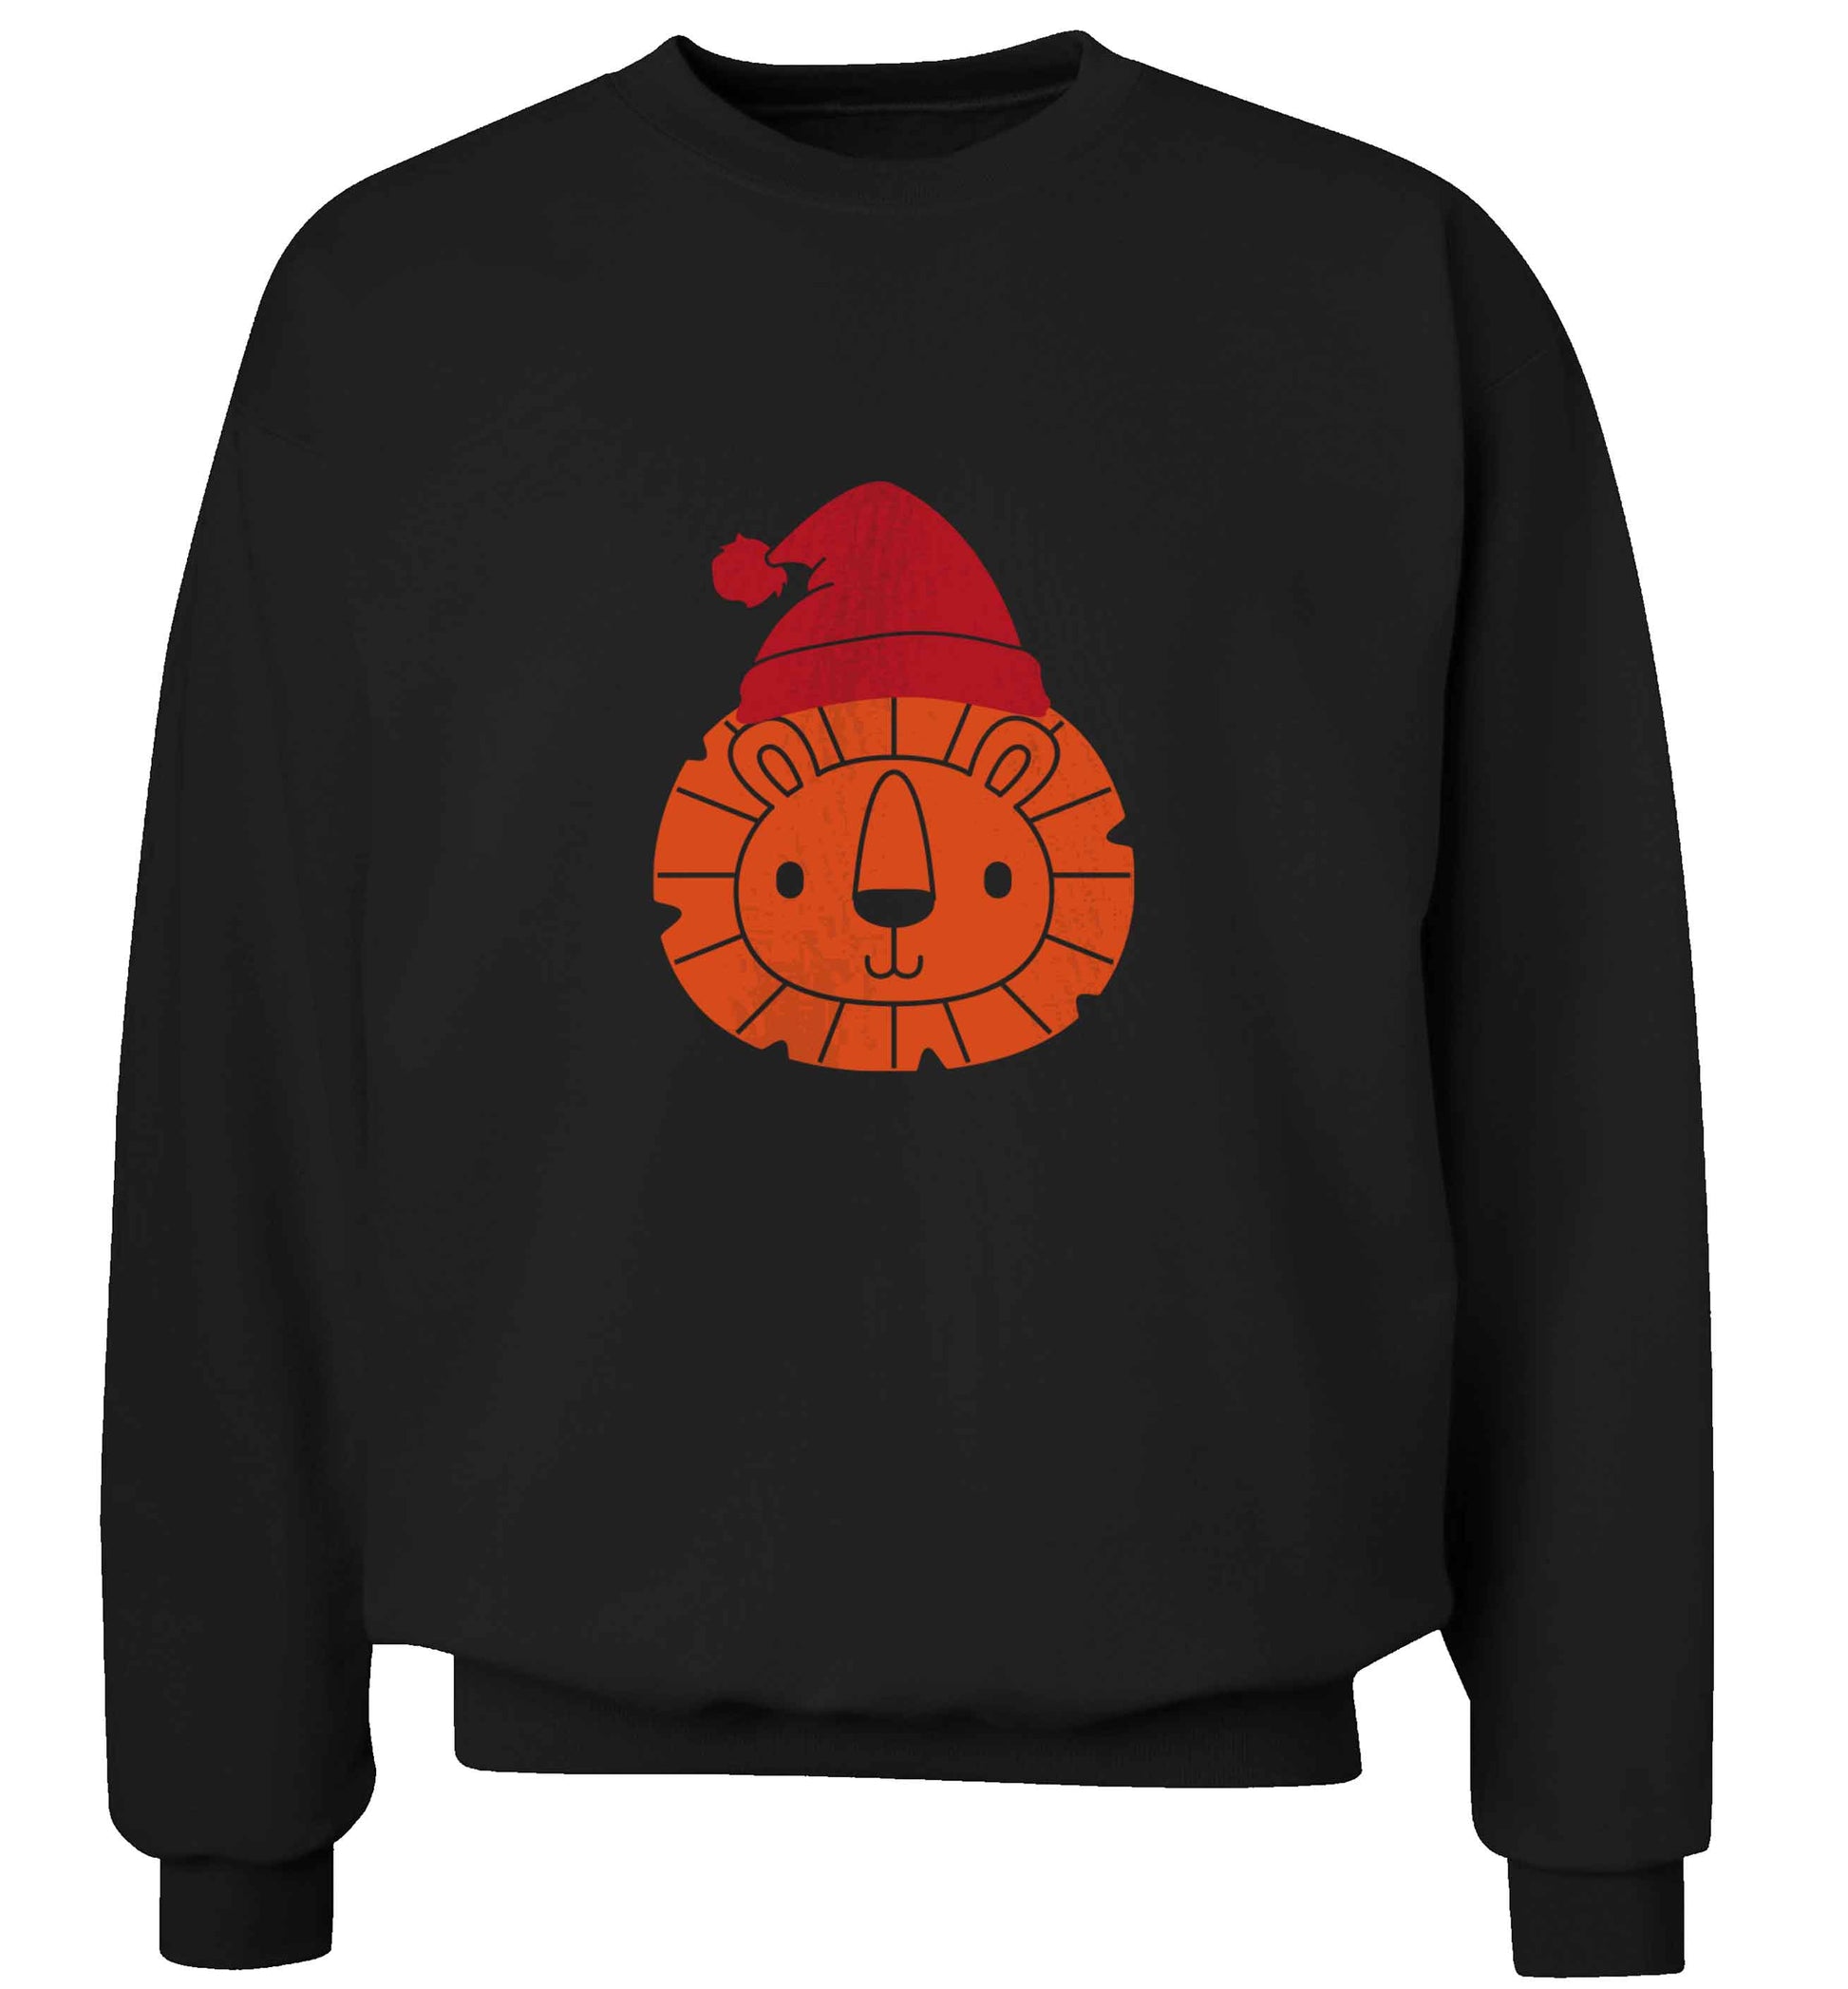 Santa lion adult's unisex black sweater 2XL